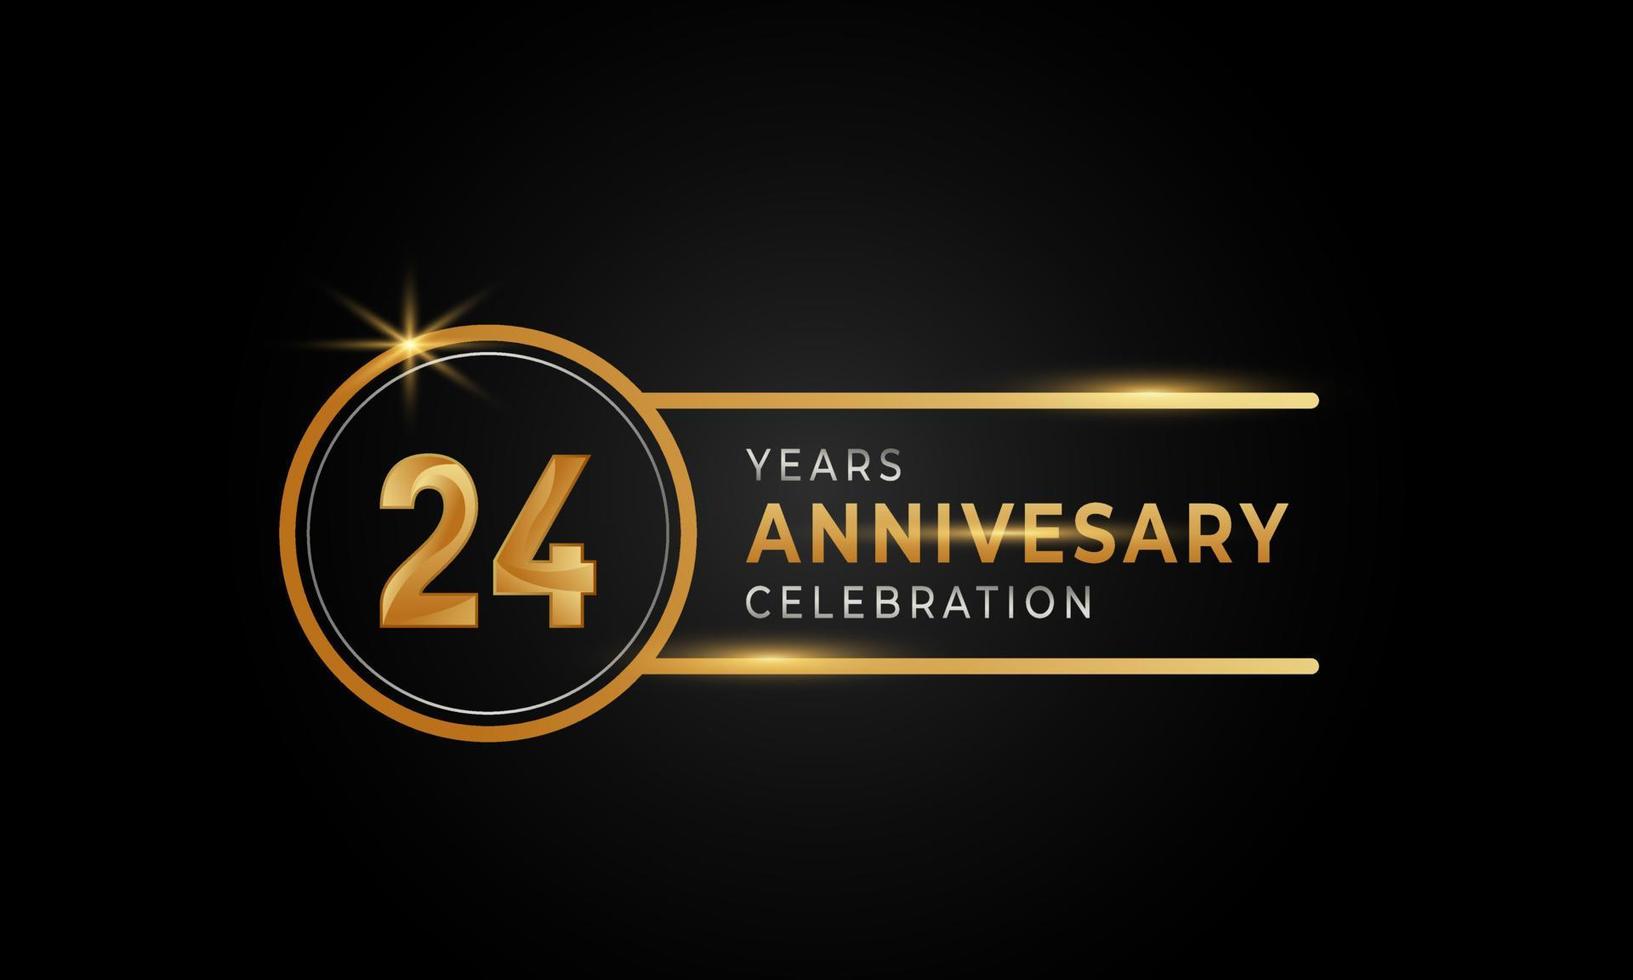 Celebración de 24 años de color dorado y plateado con anillo circular para evento de celebración, boda, tarjeta de felicitación e invitación aislada en fondo negro vector